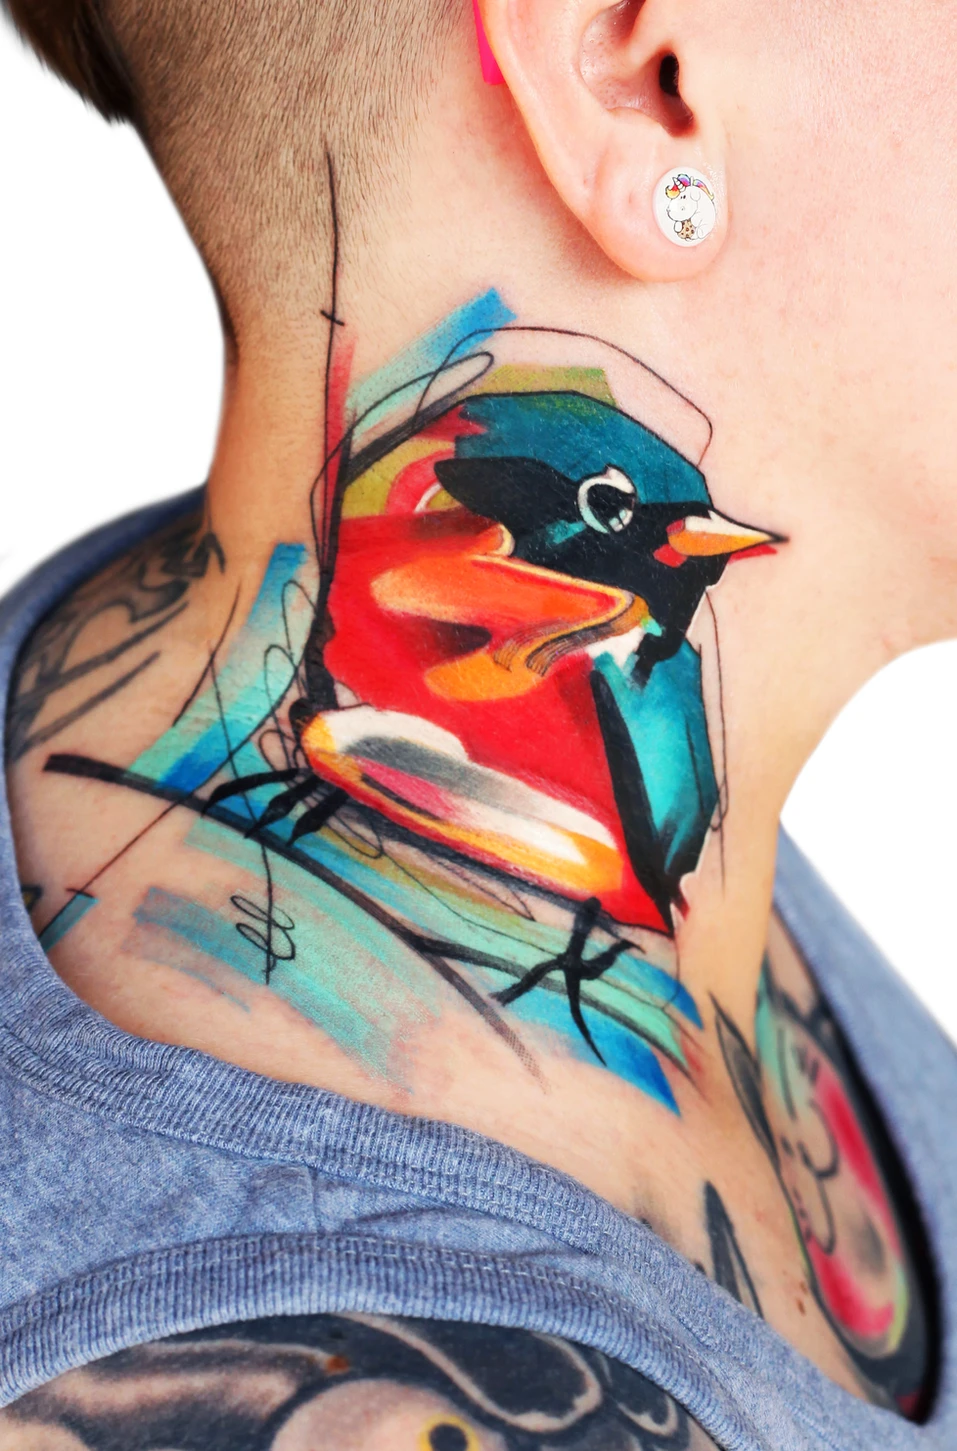 Watercolor blue bird by Jeff Barnard: TattooNOW